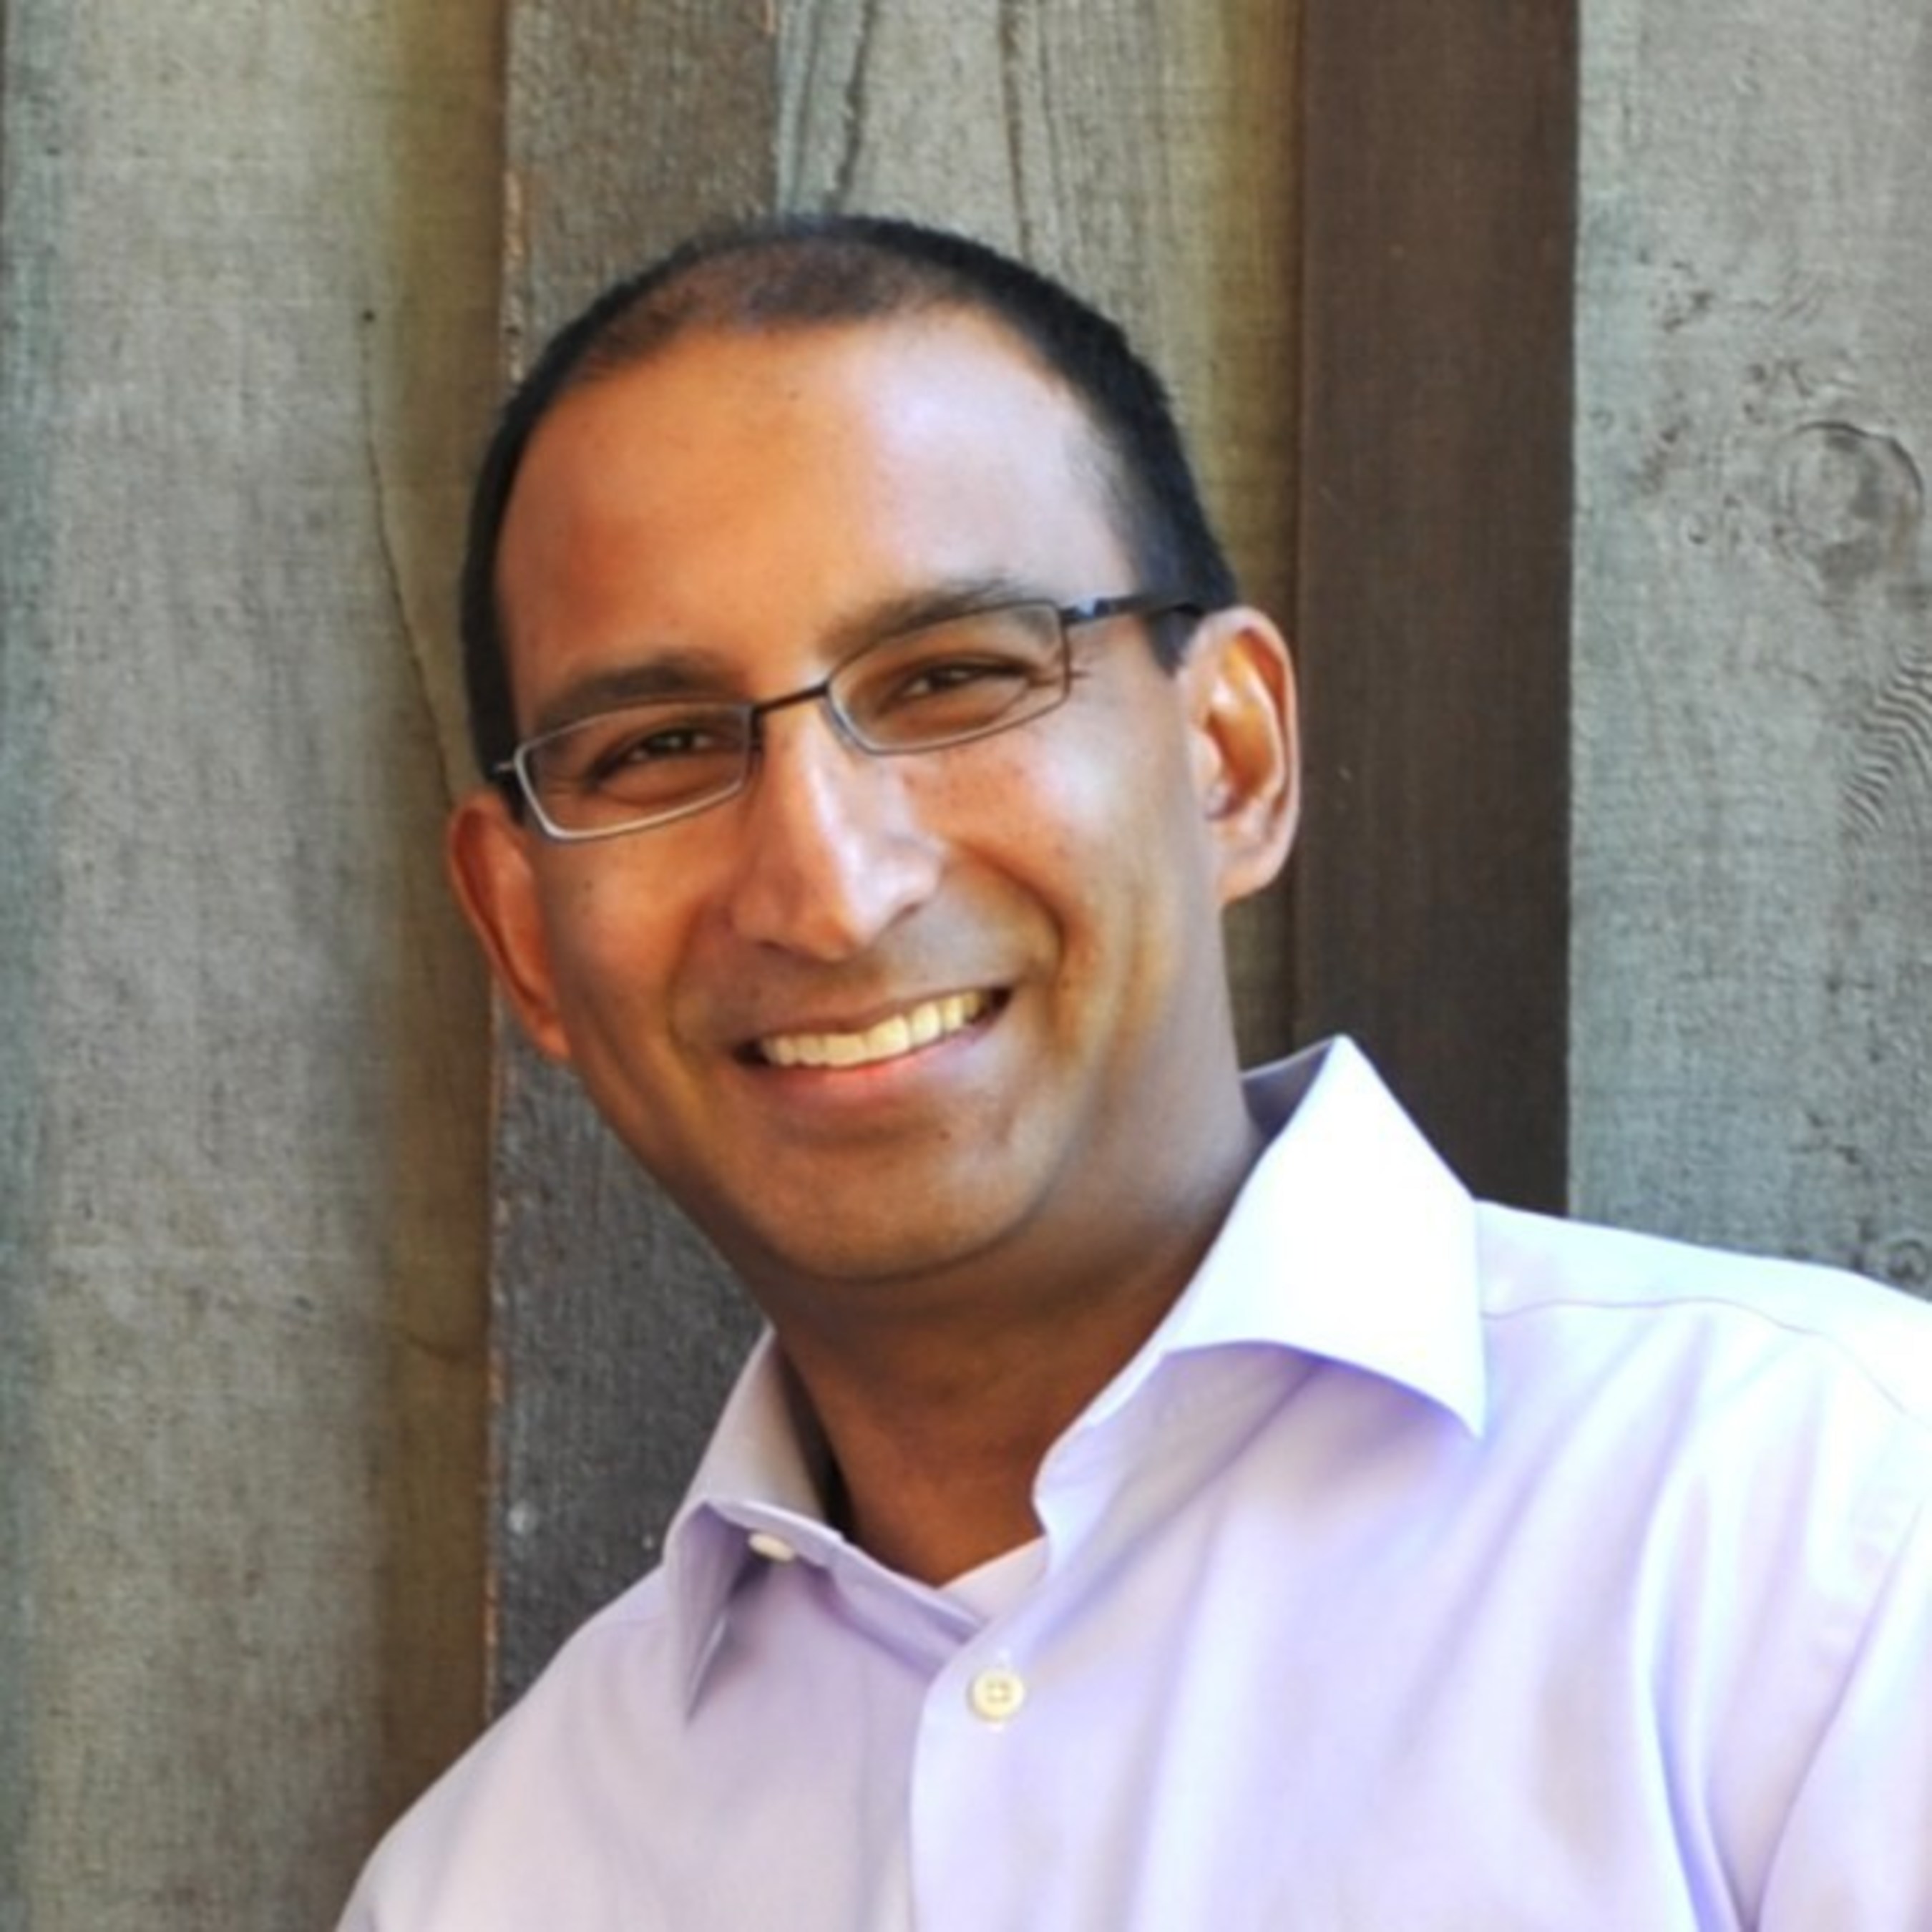 SendGrid appoints Sameer Dholakia as new CEO to lead next phase of company growth. (PRNewsFoto/SendGrid)